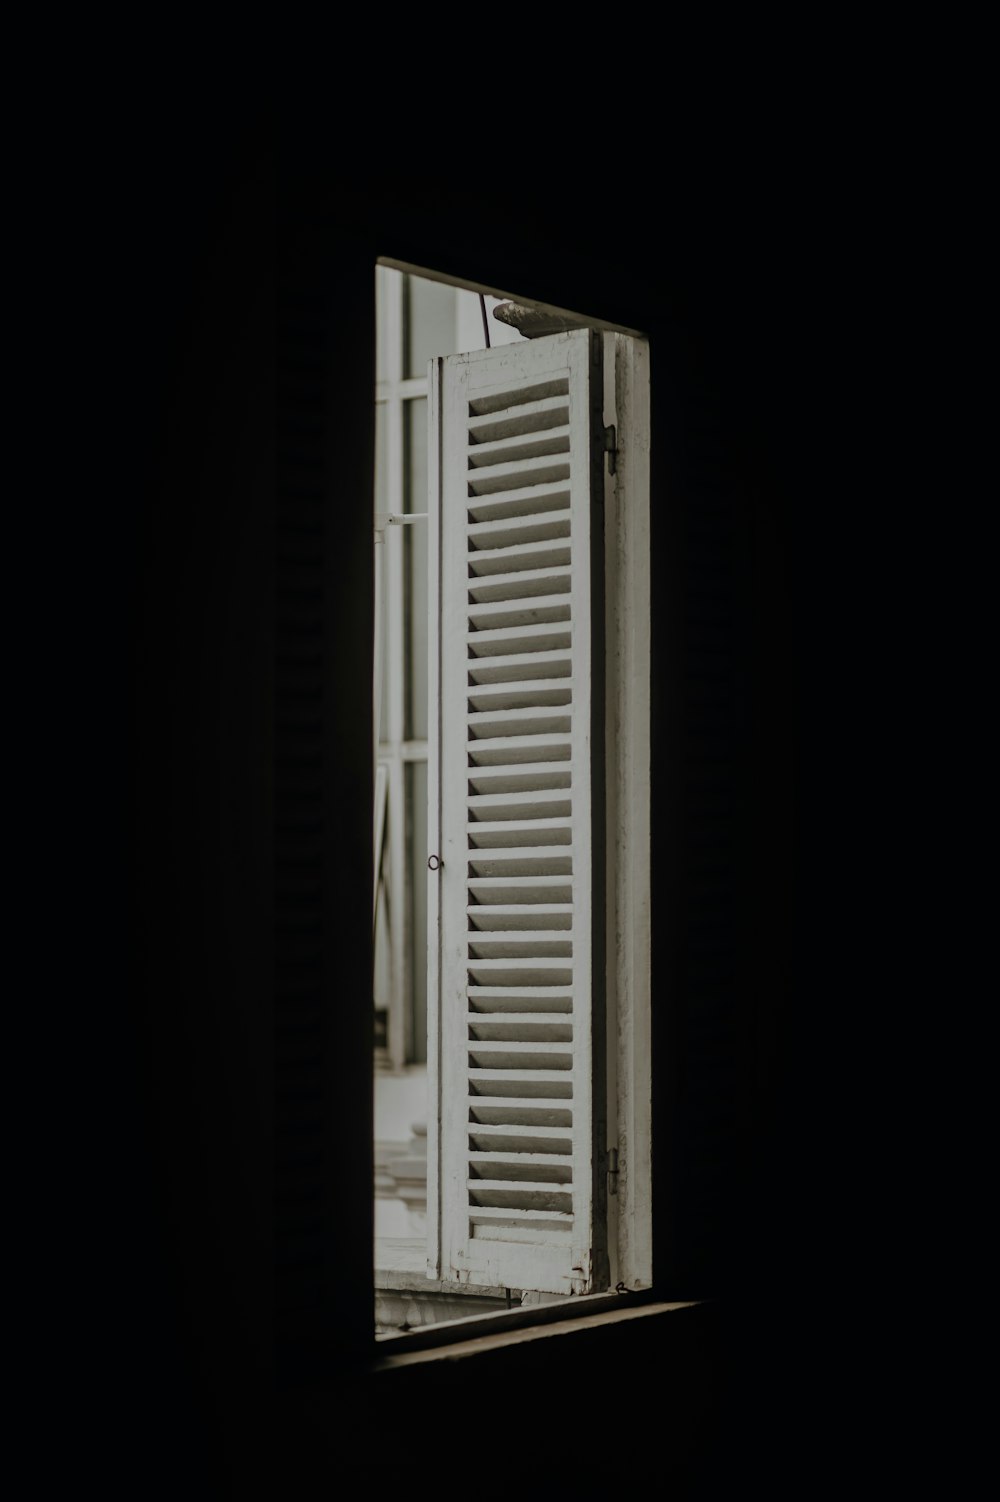 a window in a dark room with shutters open